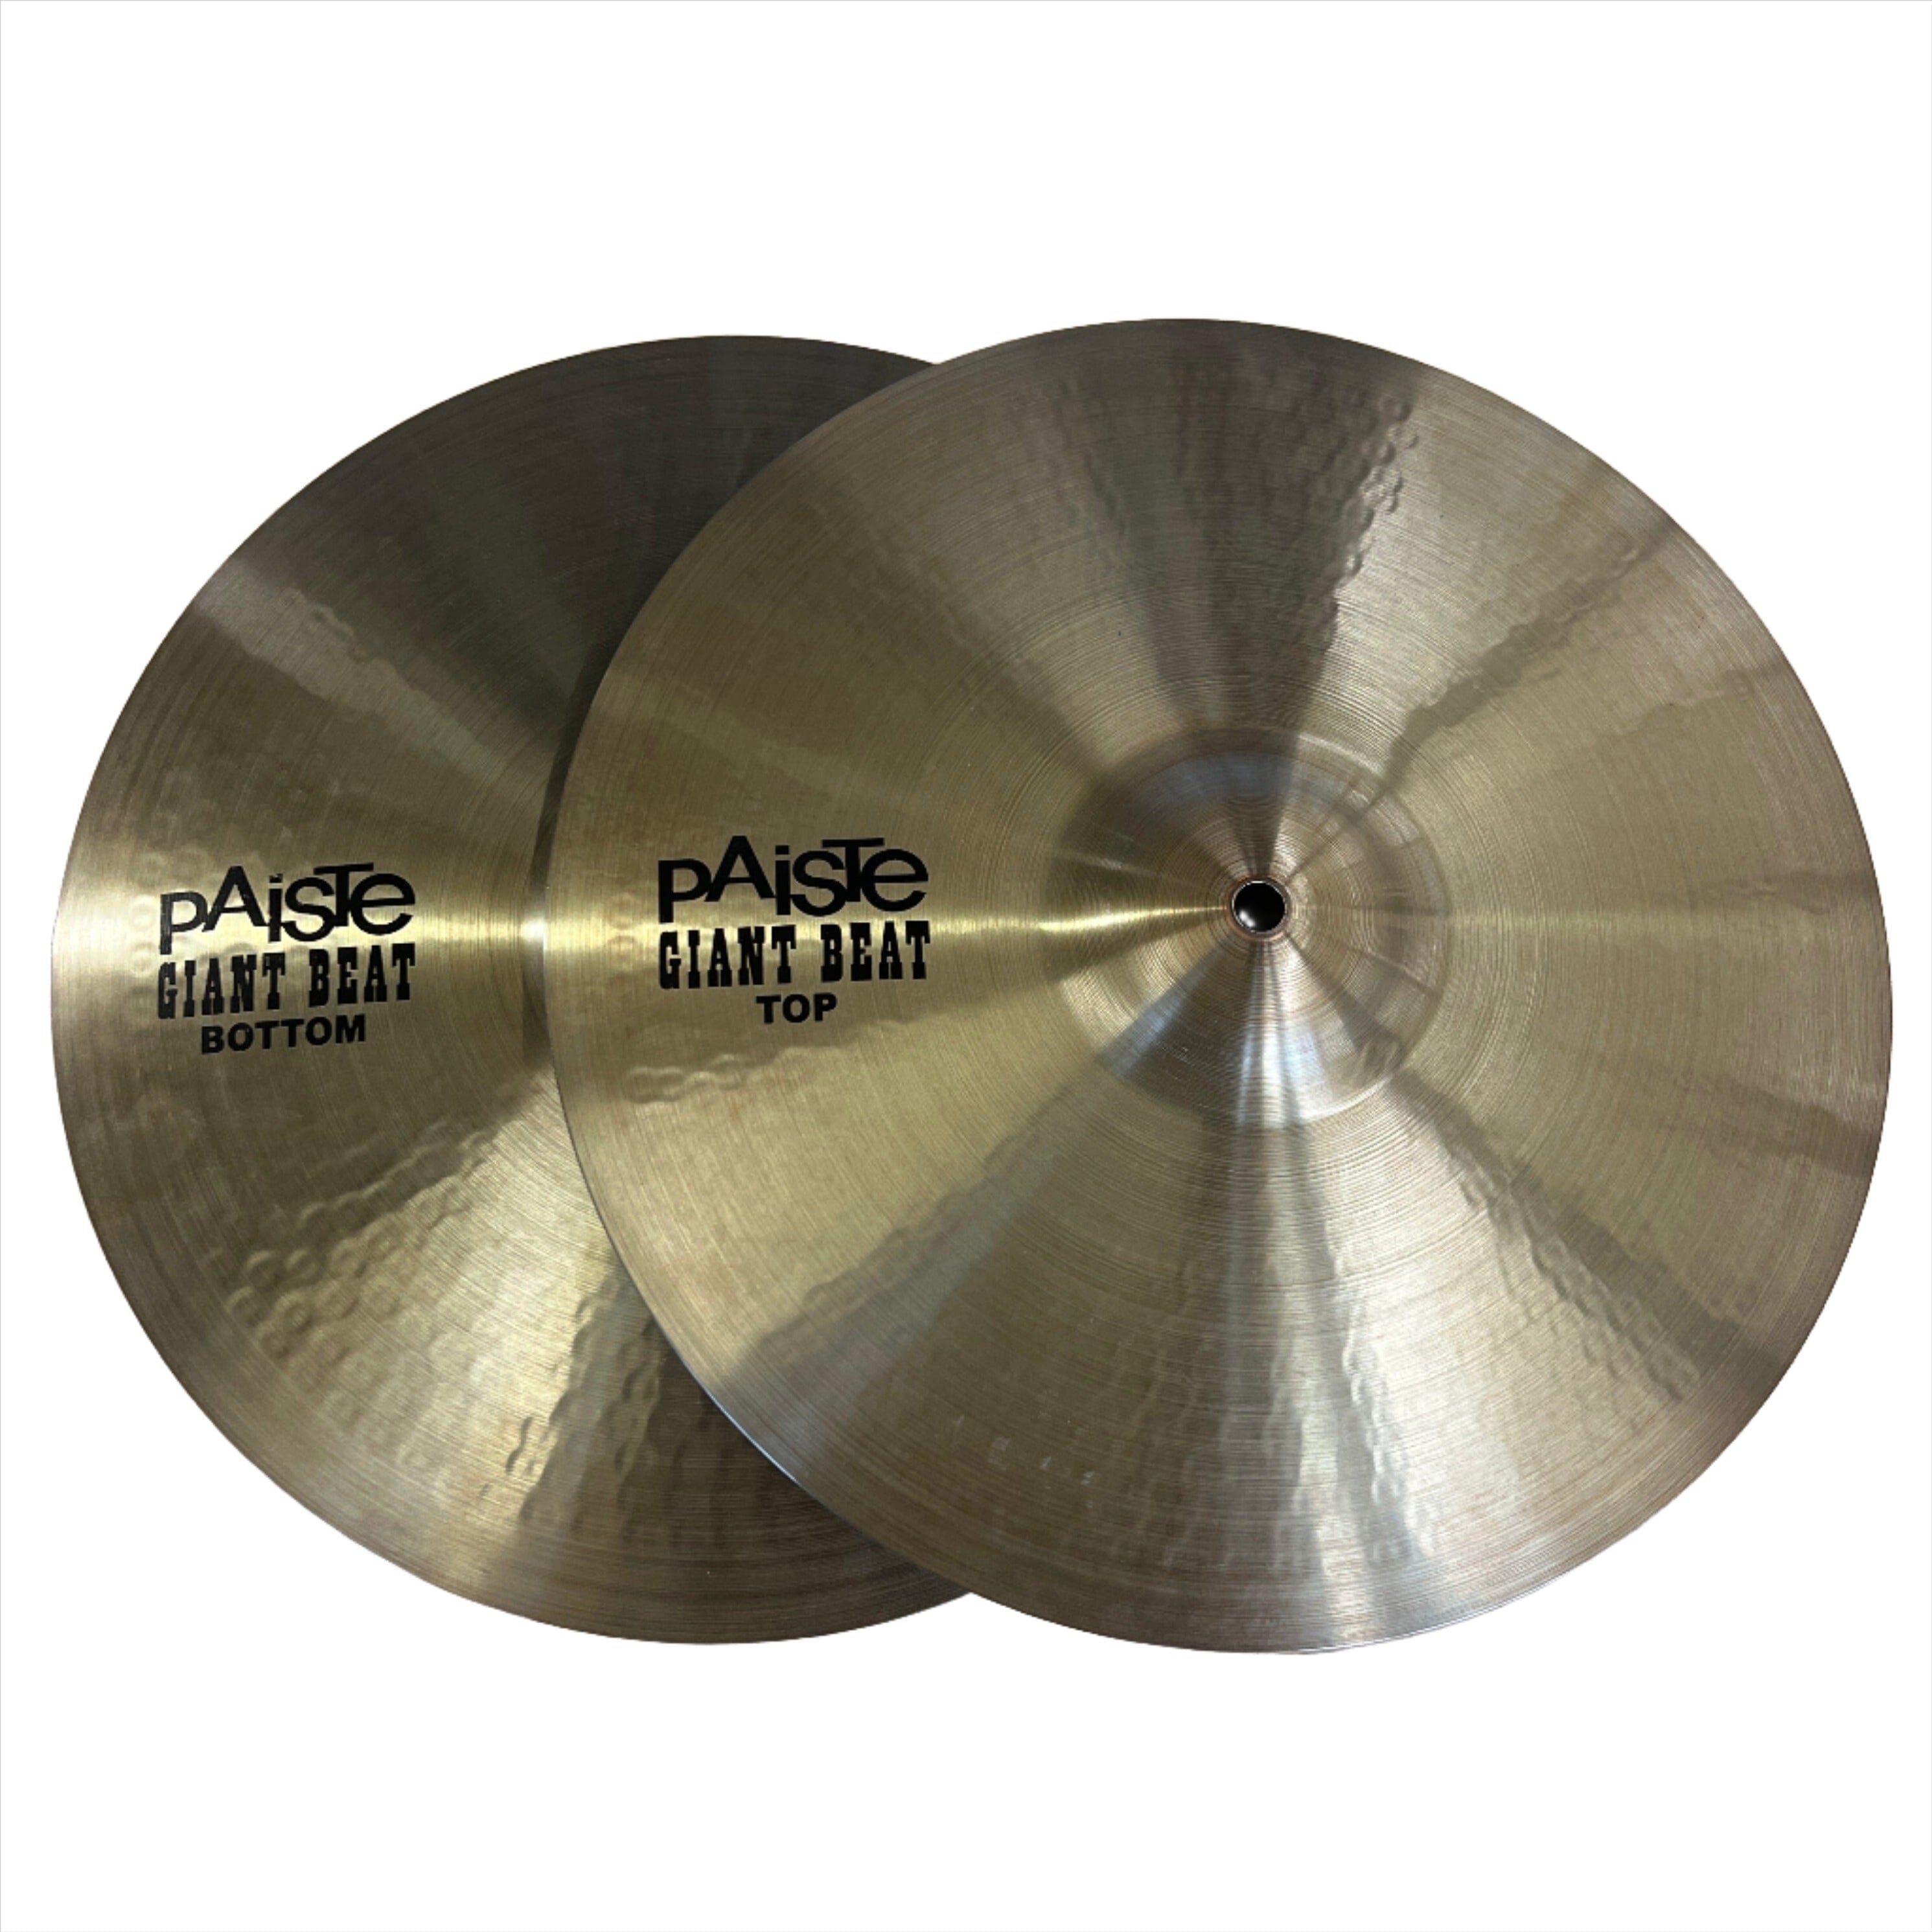 Paiste Giant Beat Hi Hats 14" Consignment cymbals Paiste 